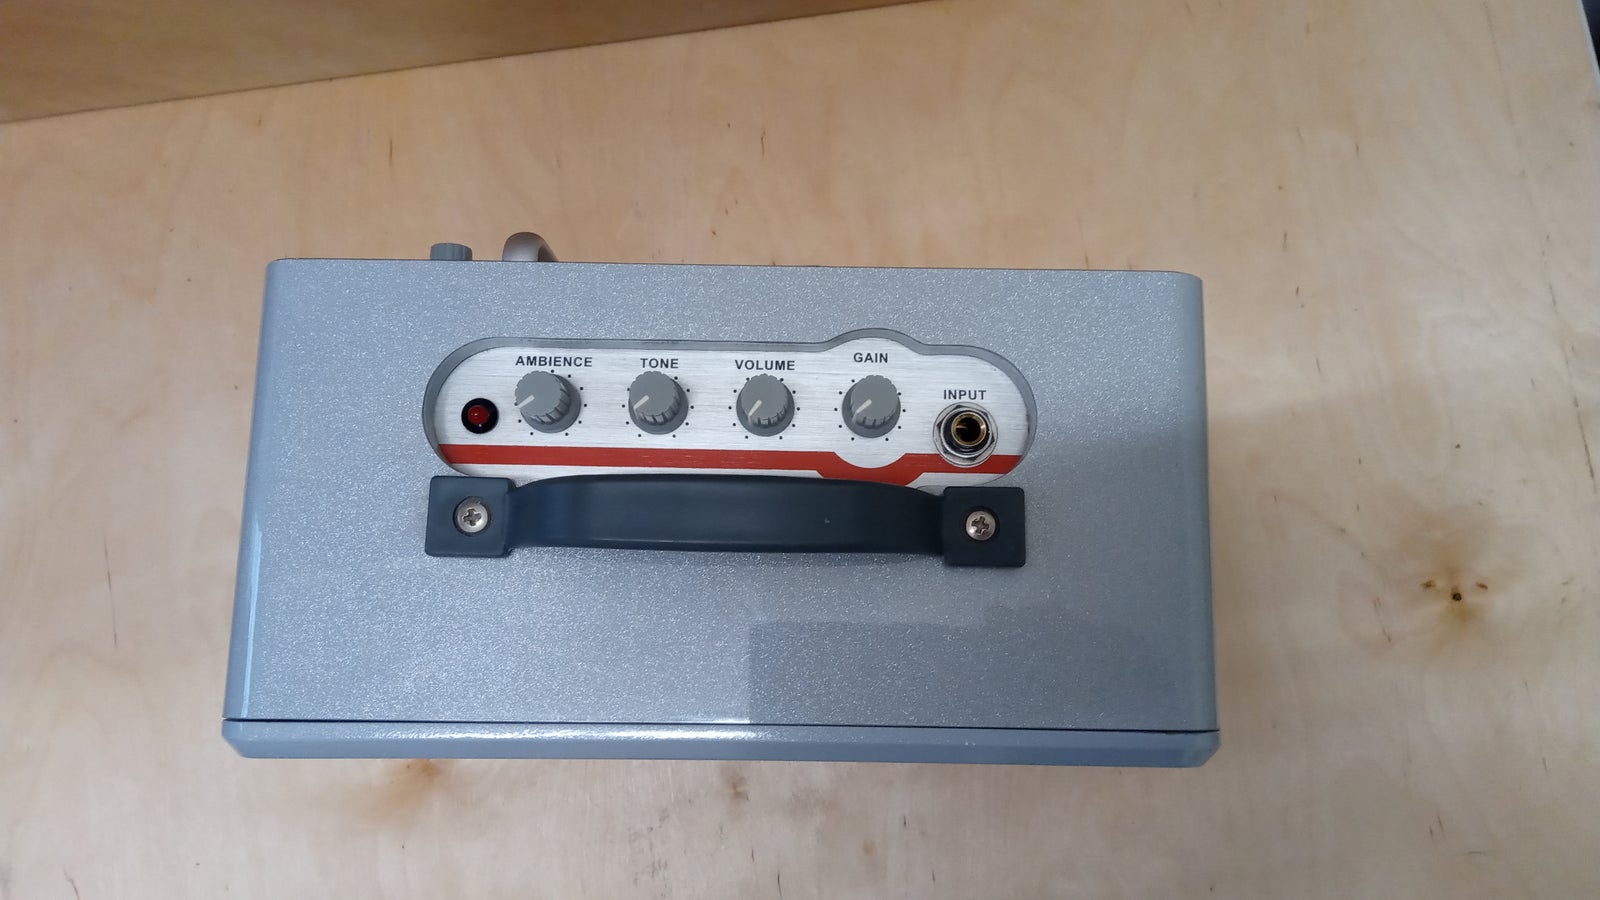 Guitarforstærker, ZT Amplifiers Lunchbox LB02, 200W W